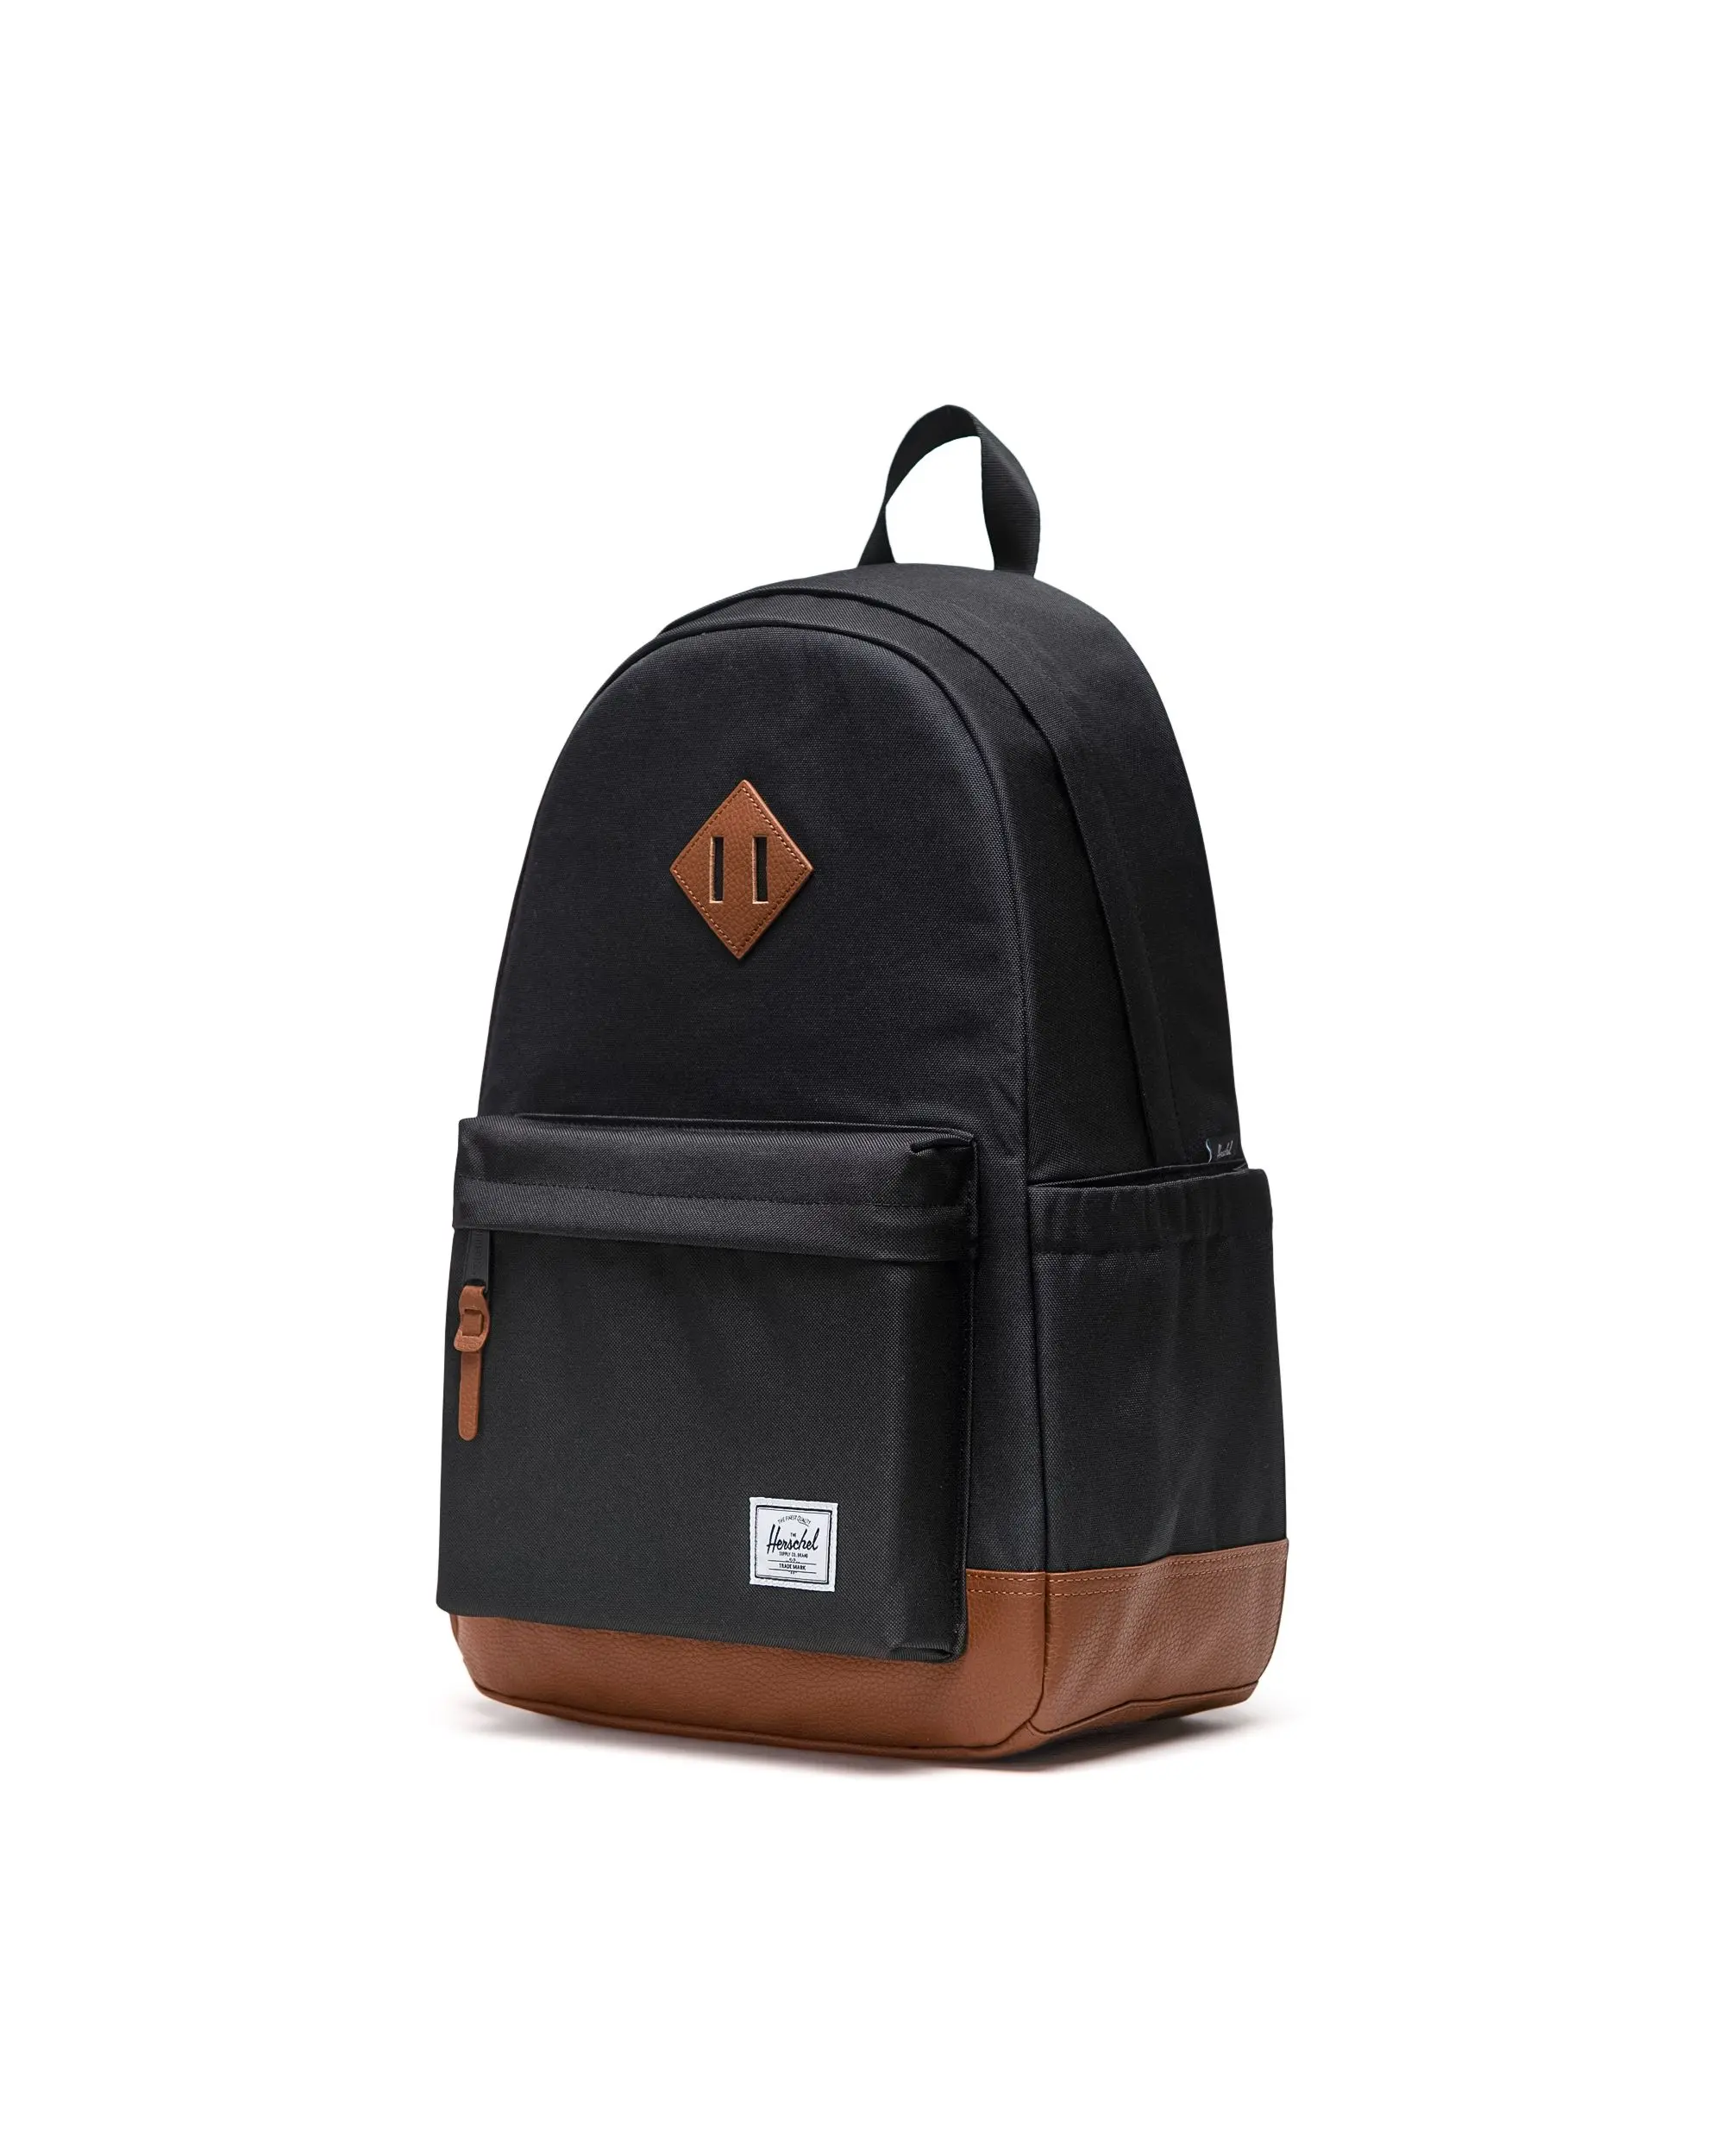 Clear Backpack for Work, School | Bonus TSA Lock | XL | 32 L | Grey